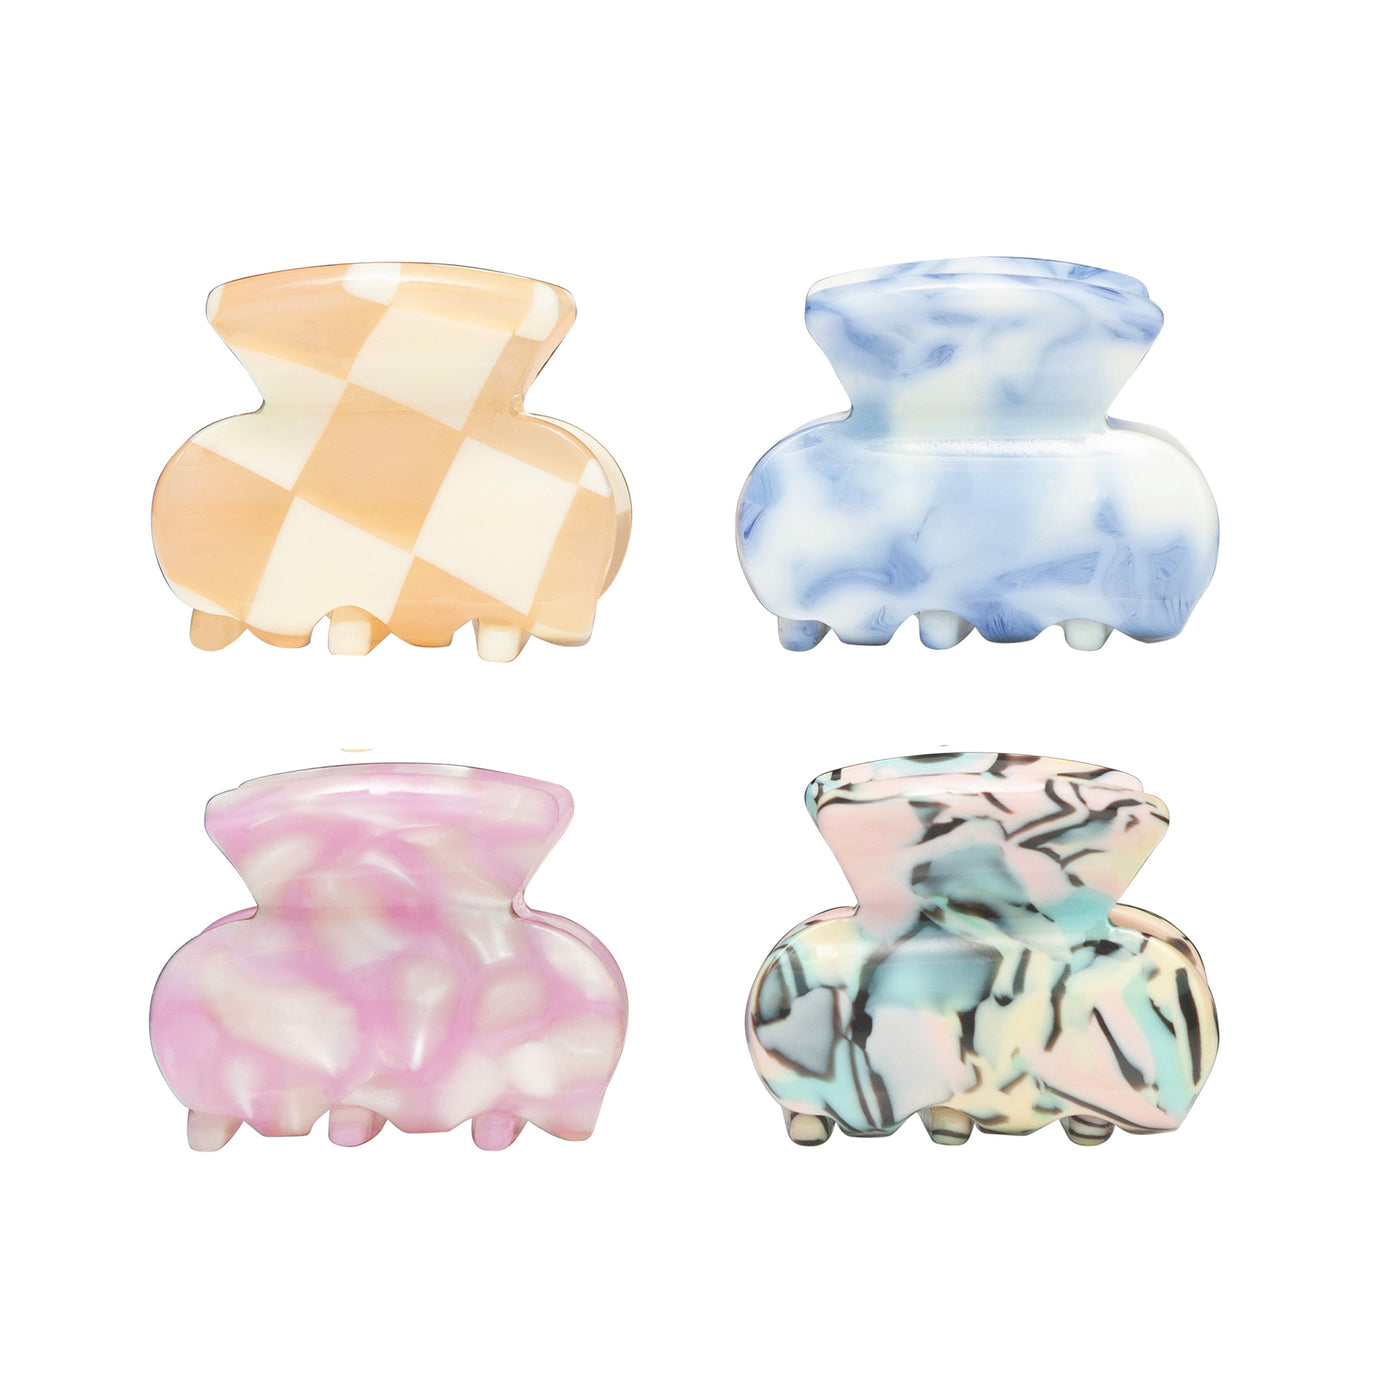 Four colourful mini bulldog clips in cheerful patterns